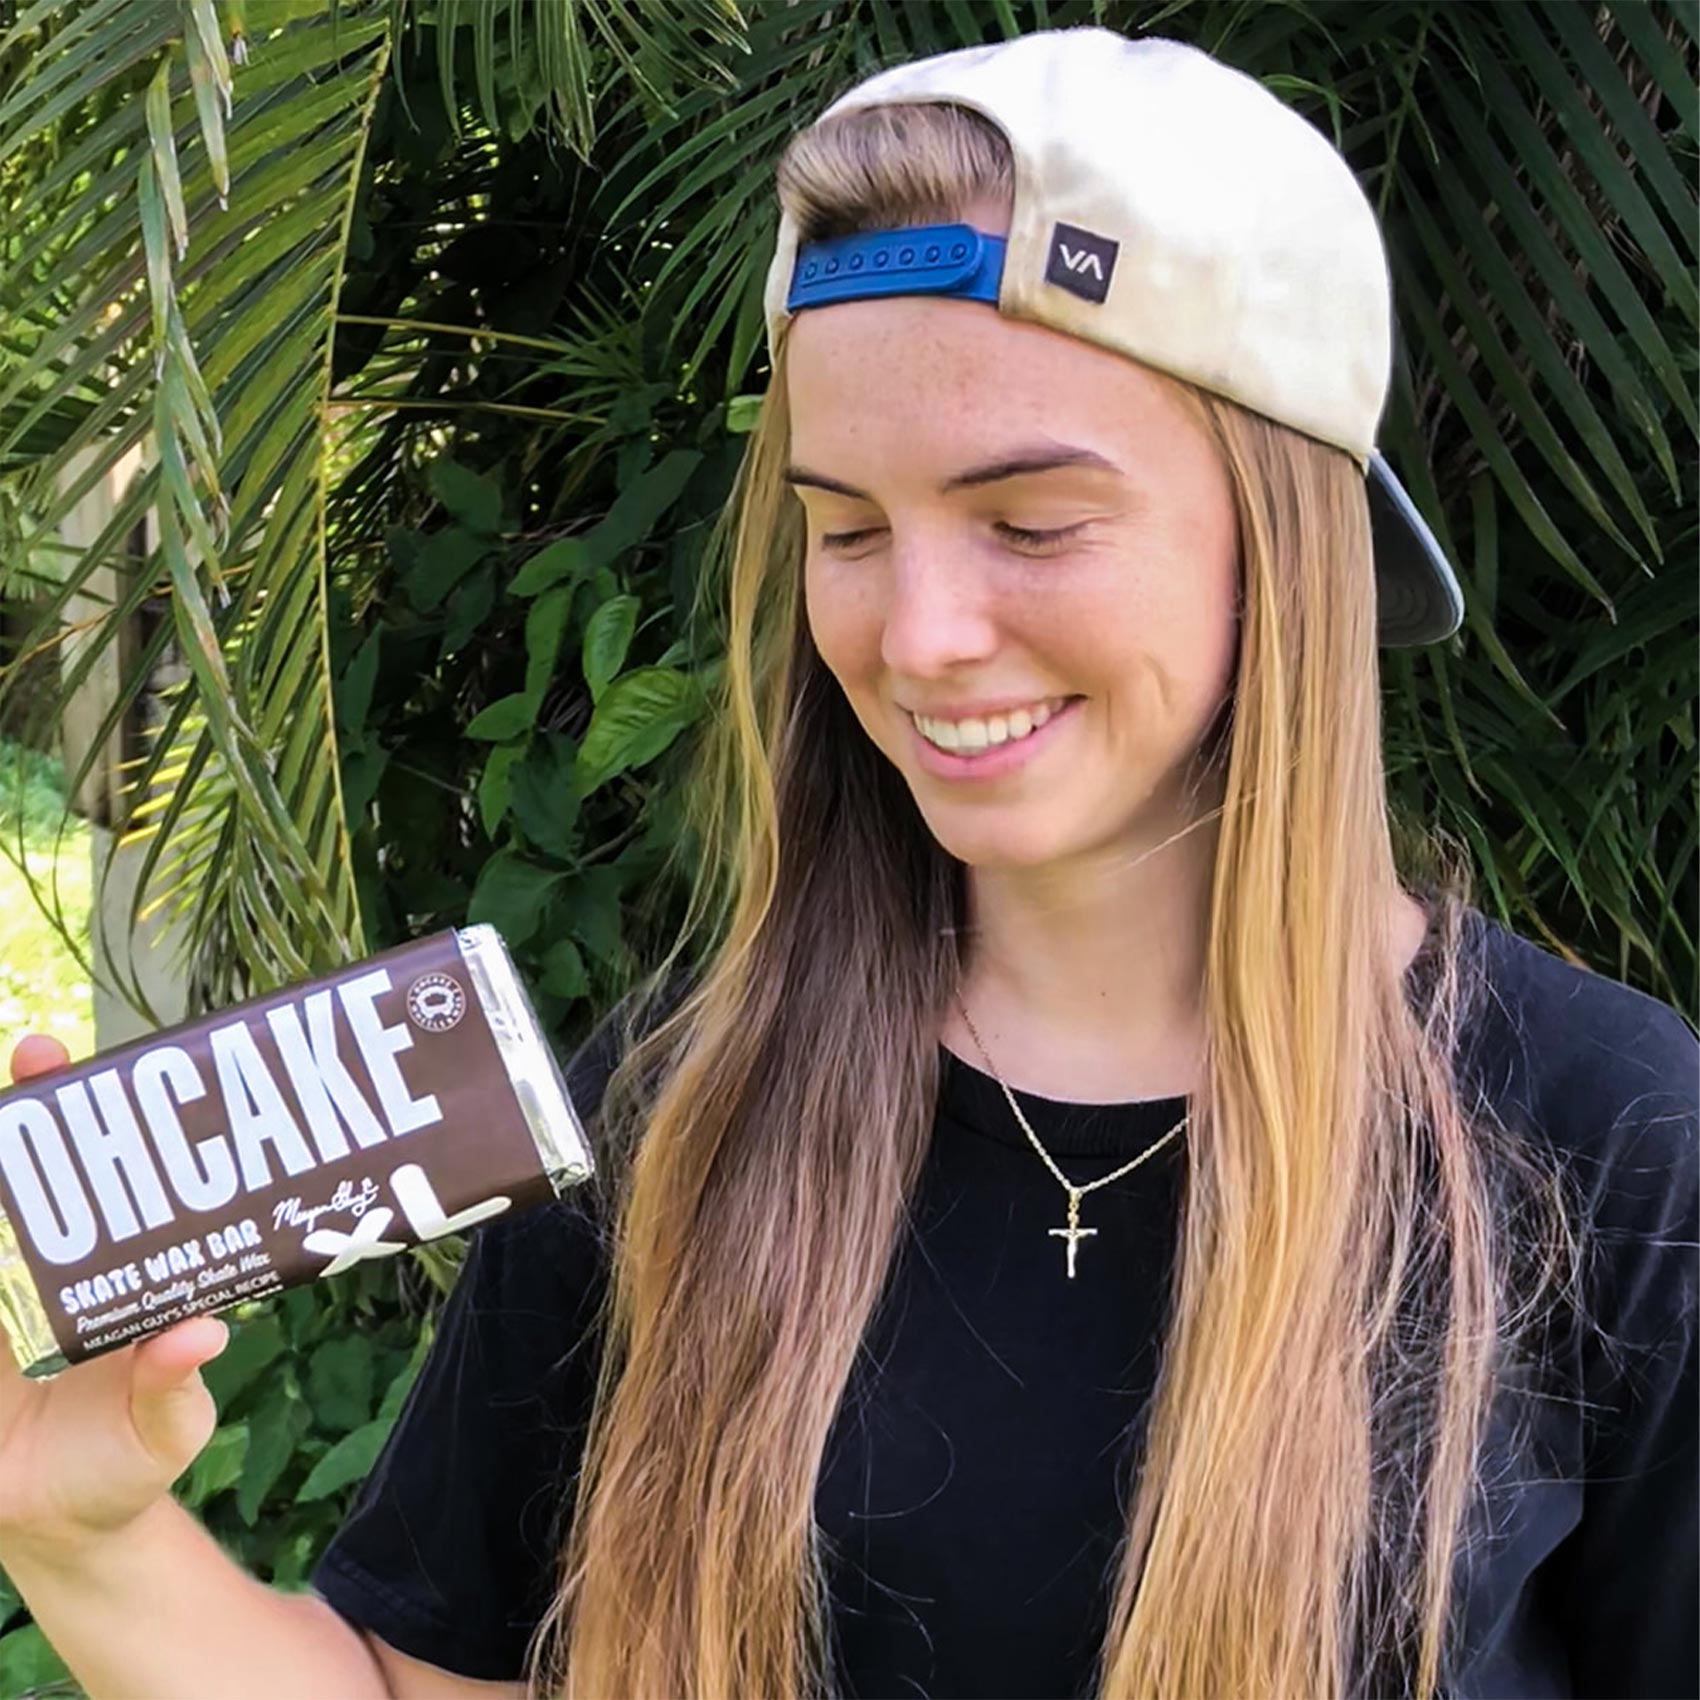 OhCake Skatewachs Meagan Guy's XL Chocolate Bar